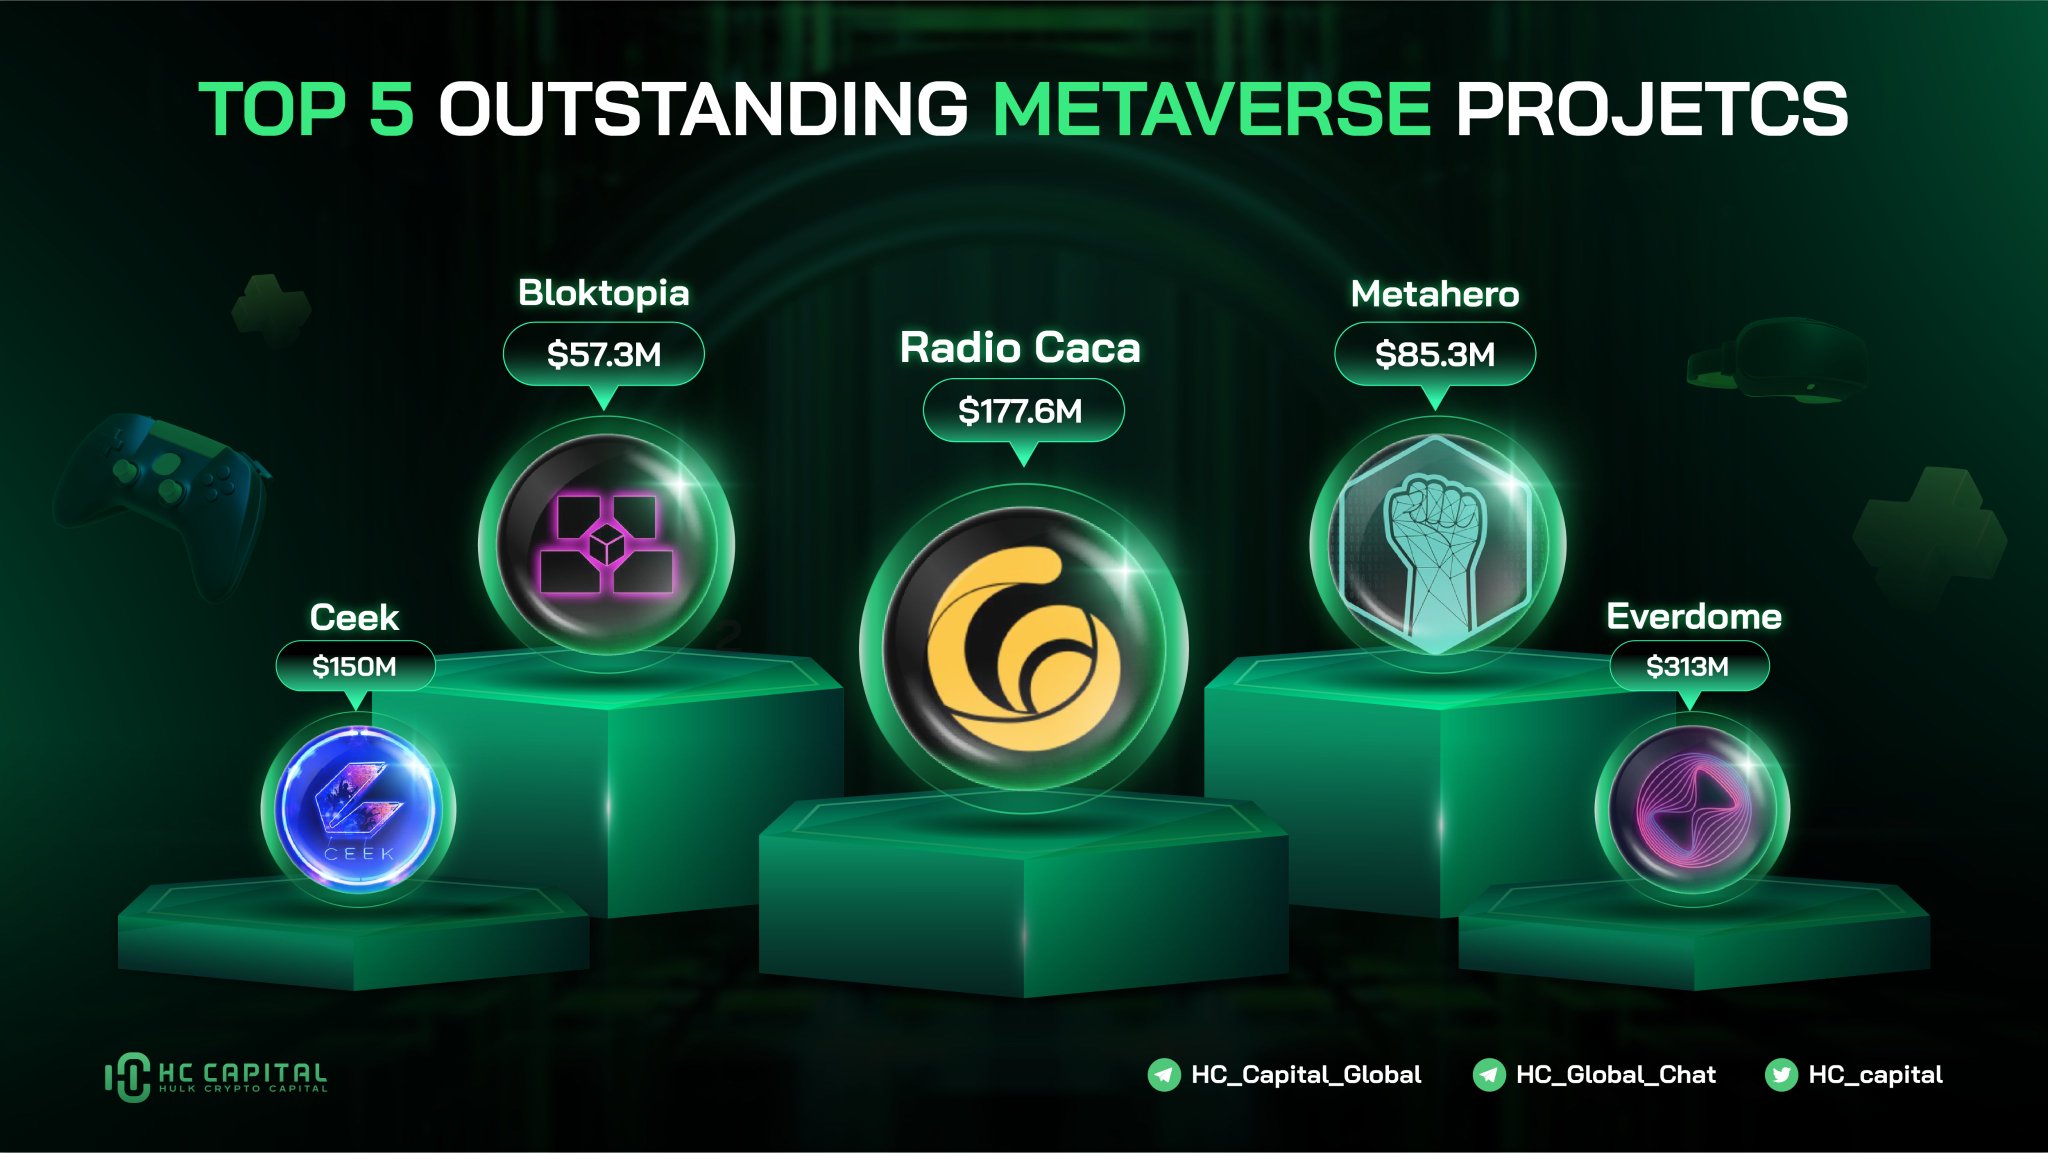 RT hc_capital: 🔥 TOP 5 Outstanding #Metaverse Projects  @RadioCacaNFT @Metahero_io @bloktopia @CEEK @Everdome_io   #Metaverse [twitter.com] [pbs.twimg.com]